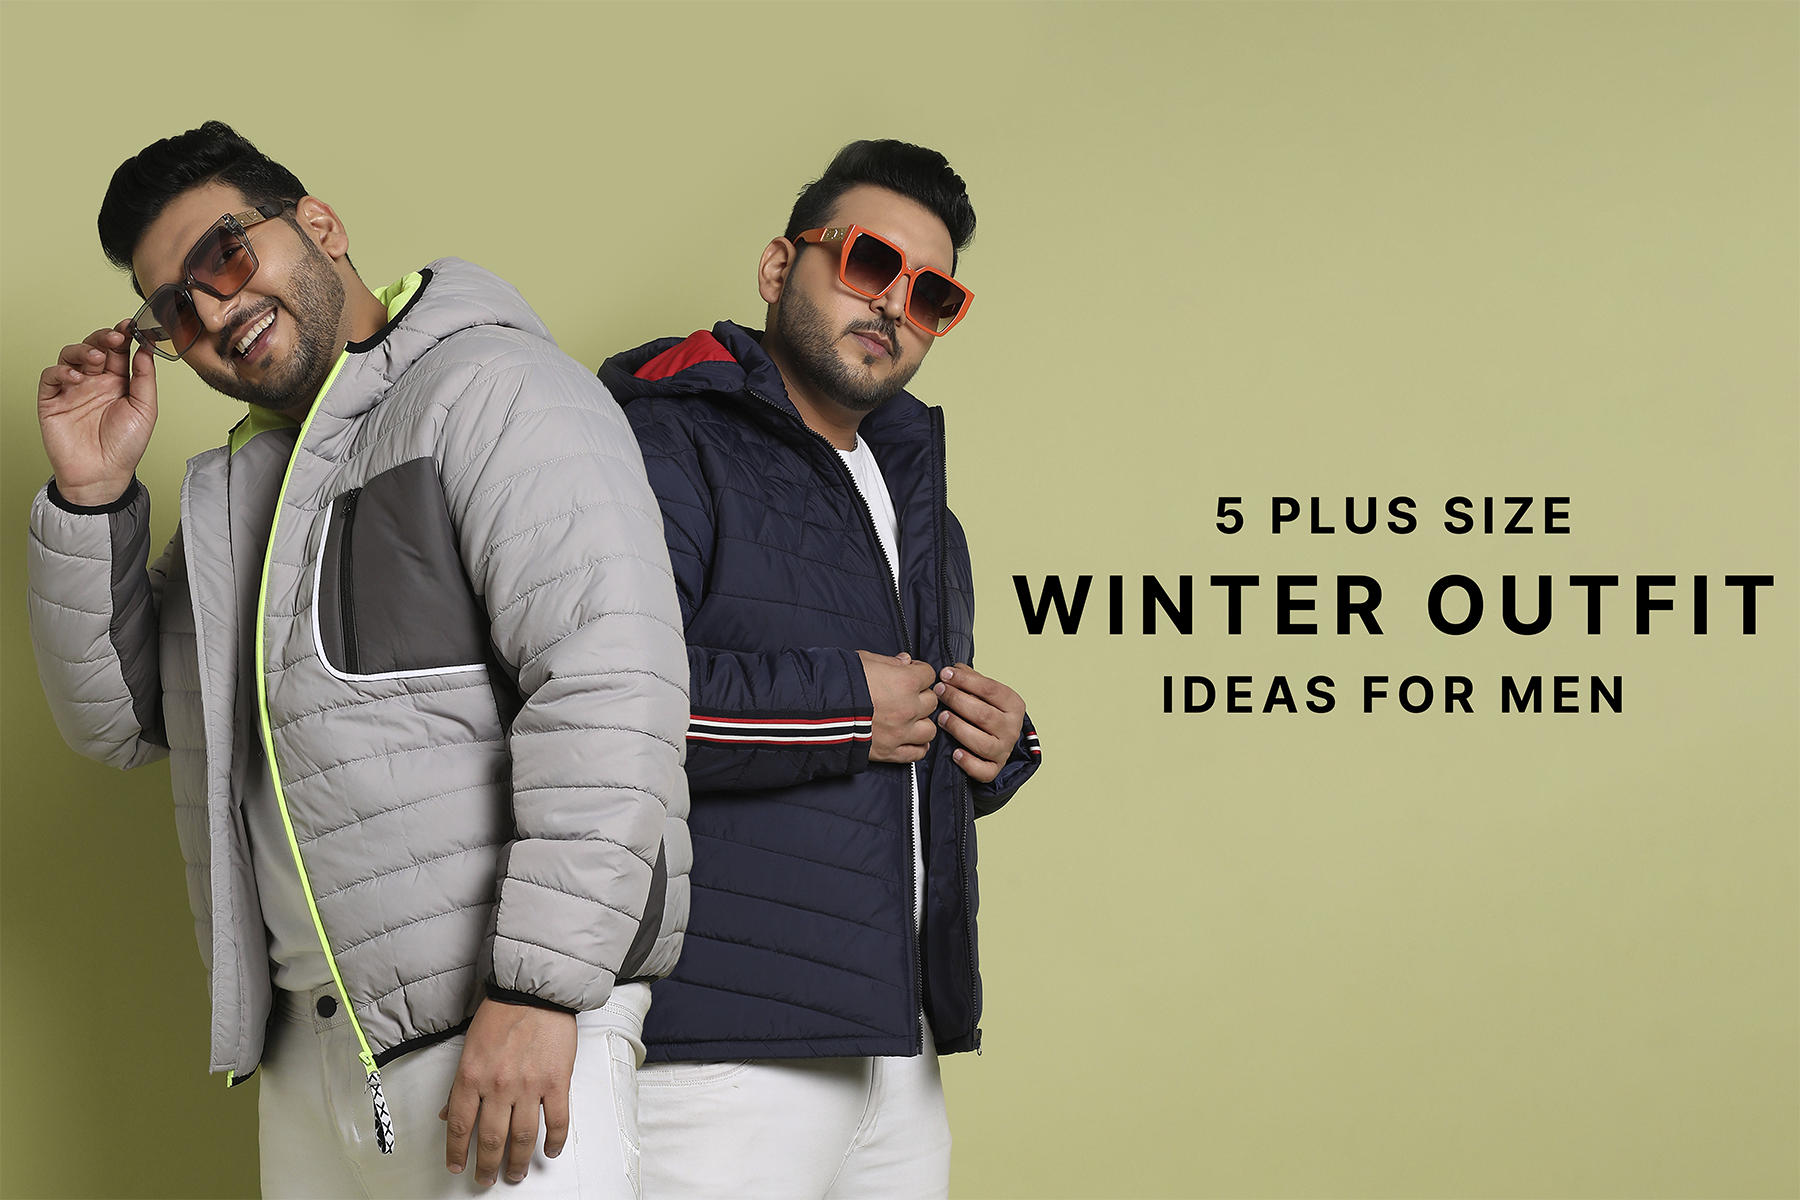 5 Plus Size Winter Outfit Ideas for Men